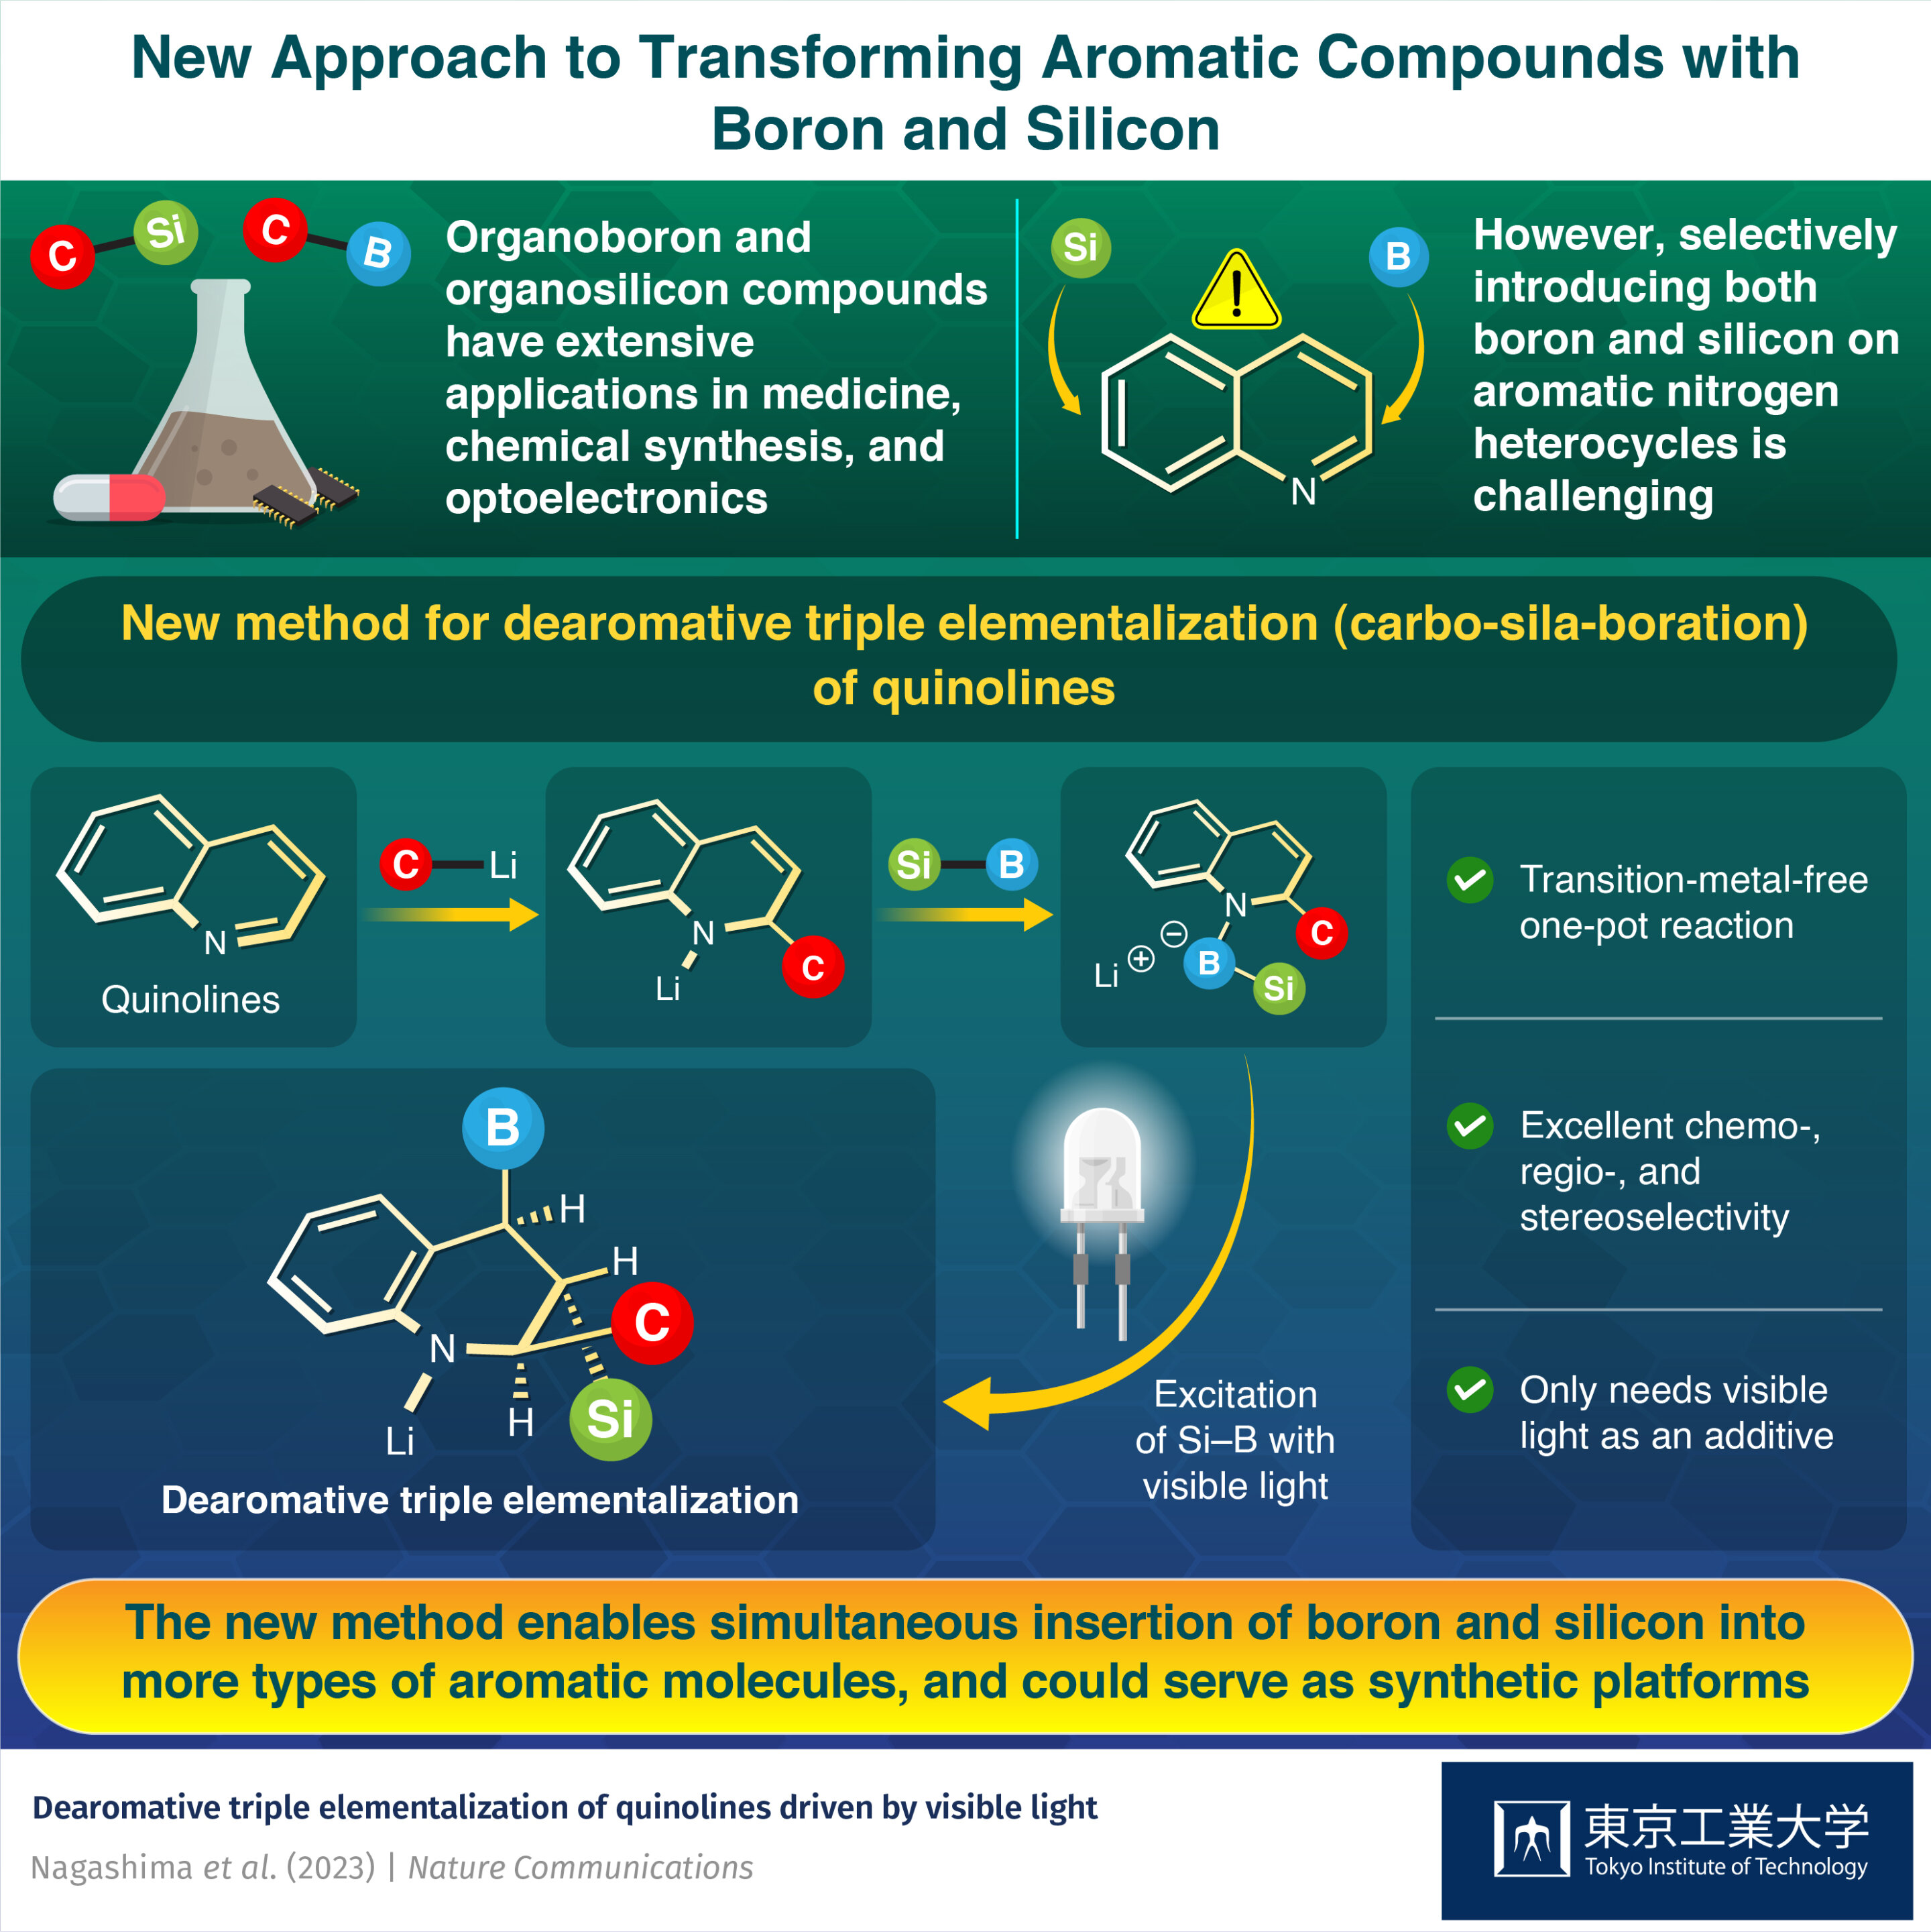 New horizons for organoboron and organosilicon chemistry with triple elementalization 